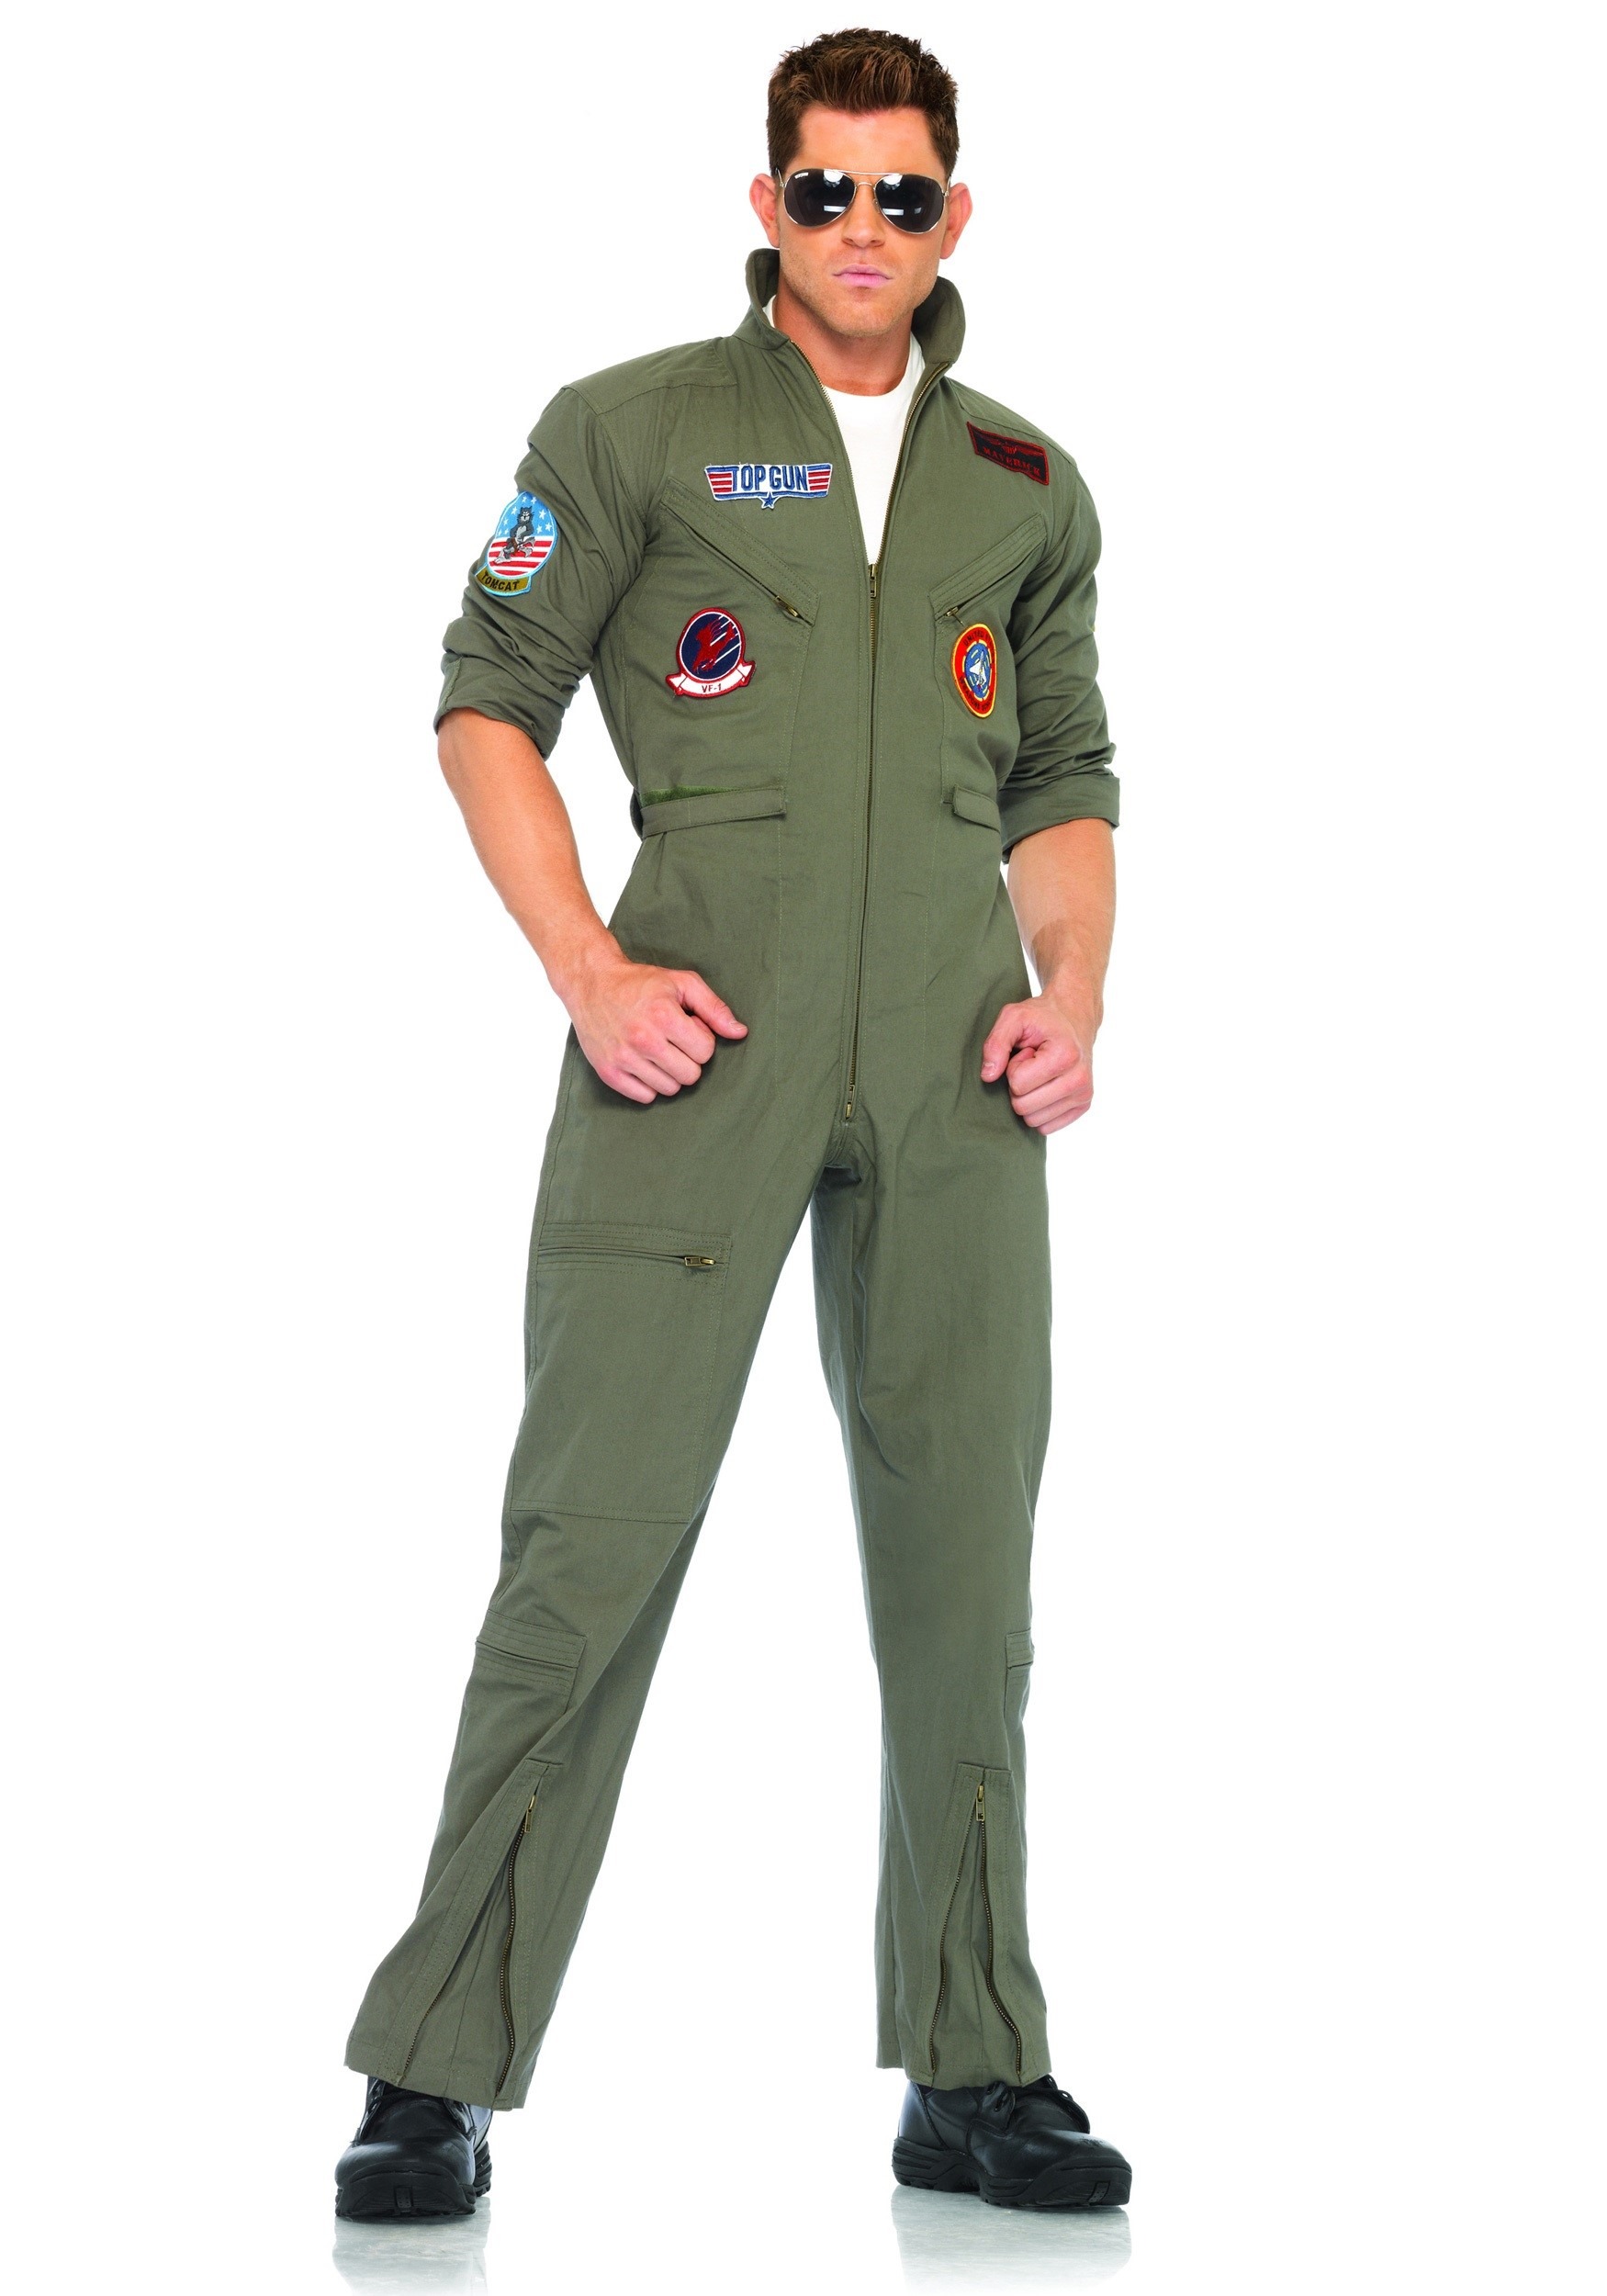 Top Gun Plus Size Jumpsuit Costume